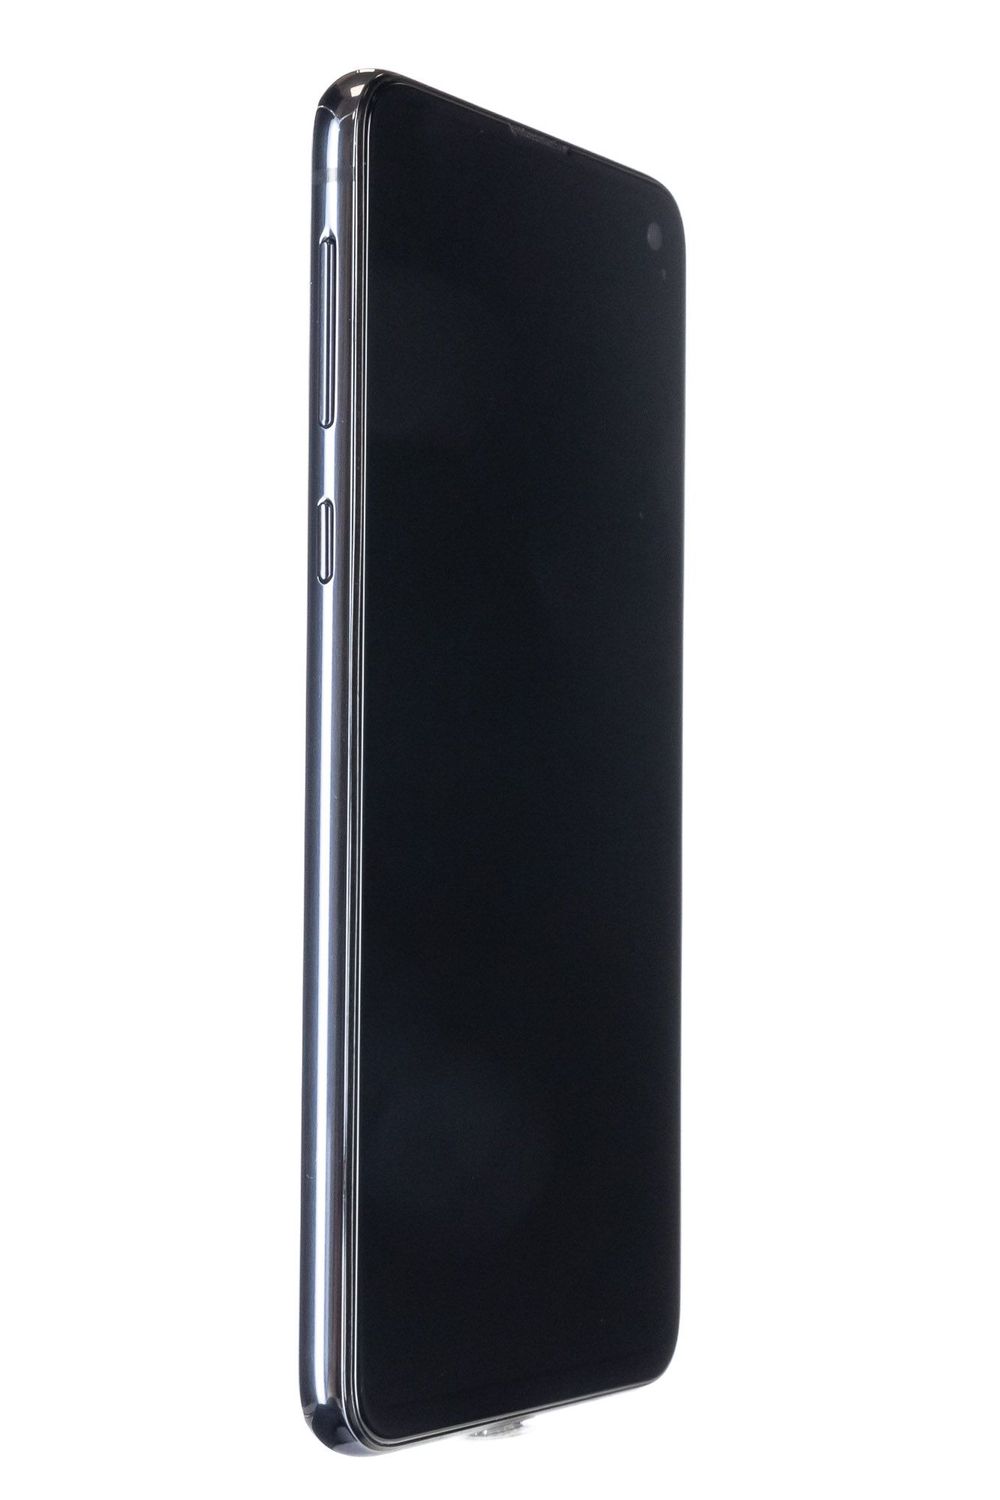 Telefon mobil Samsung Galaxy S10 e Dual Sim, Prism Black, 256 GB, Bun